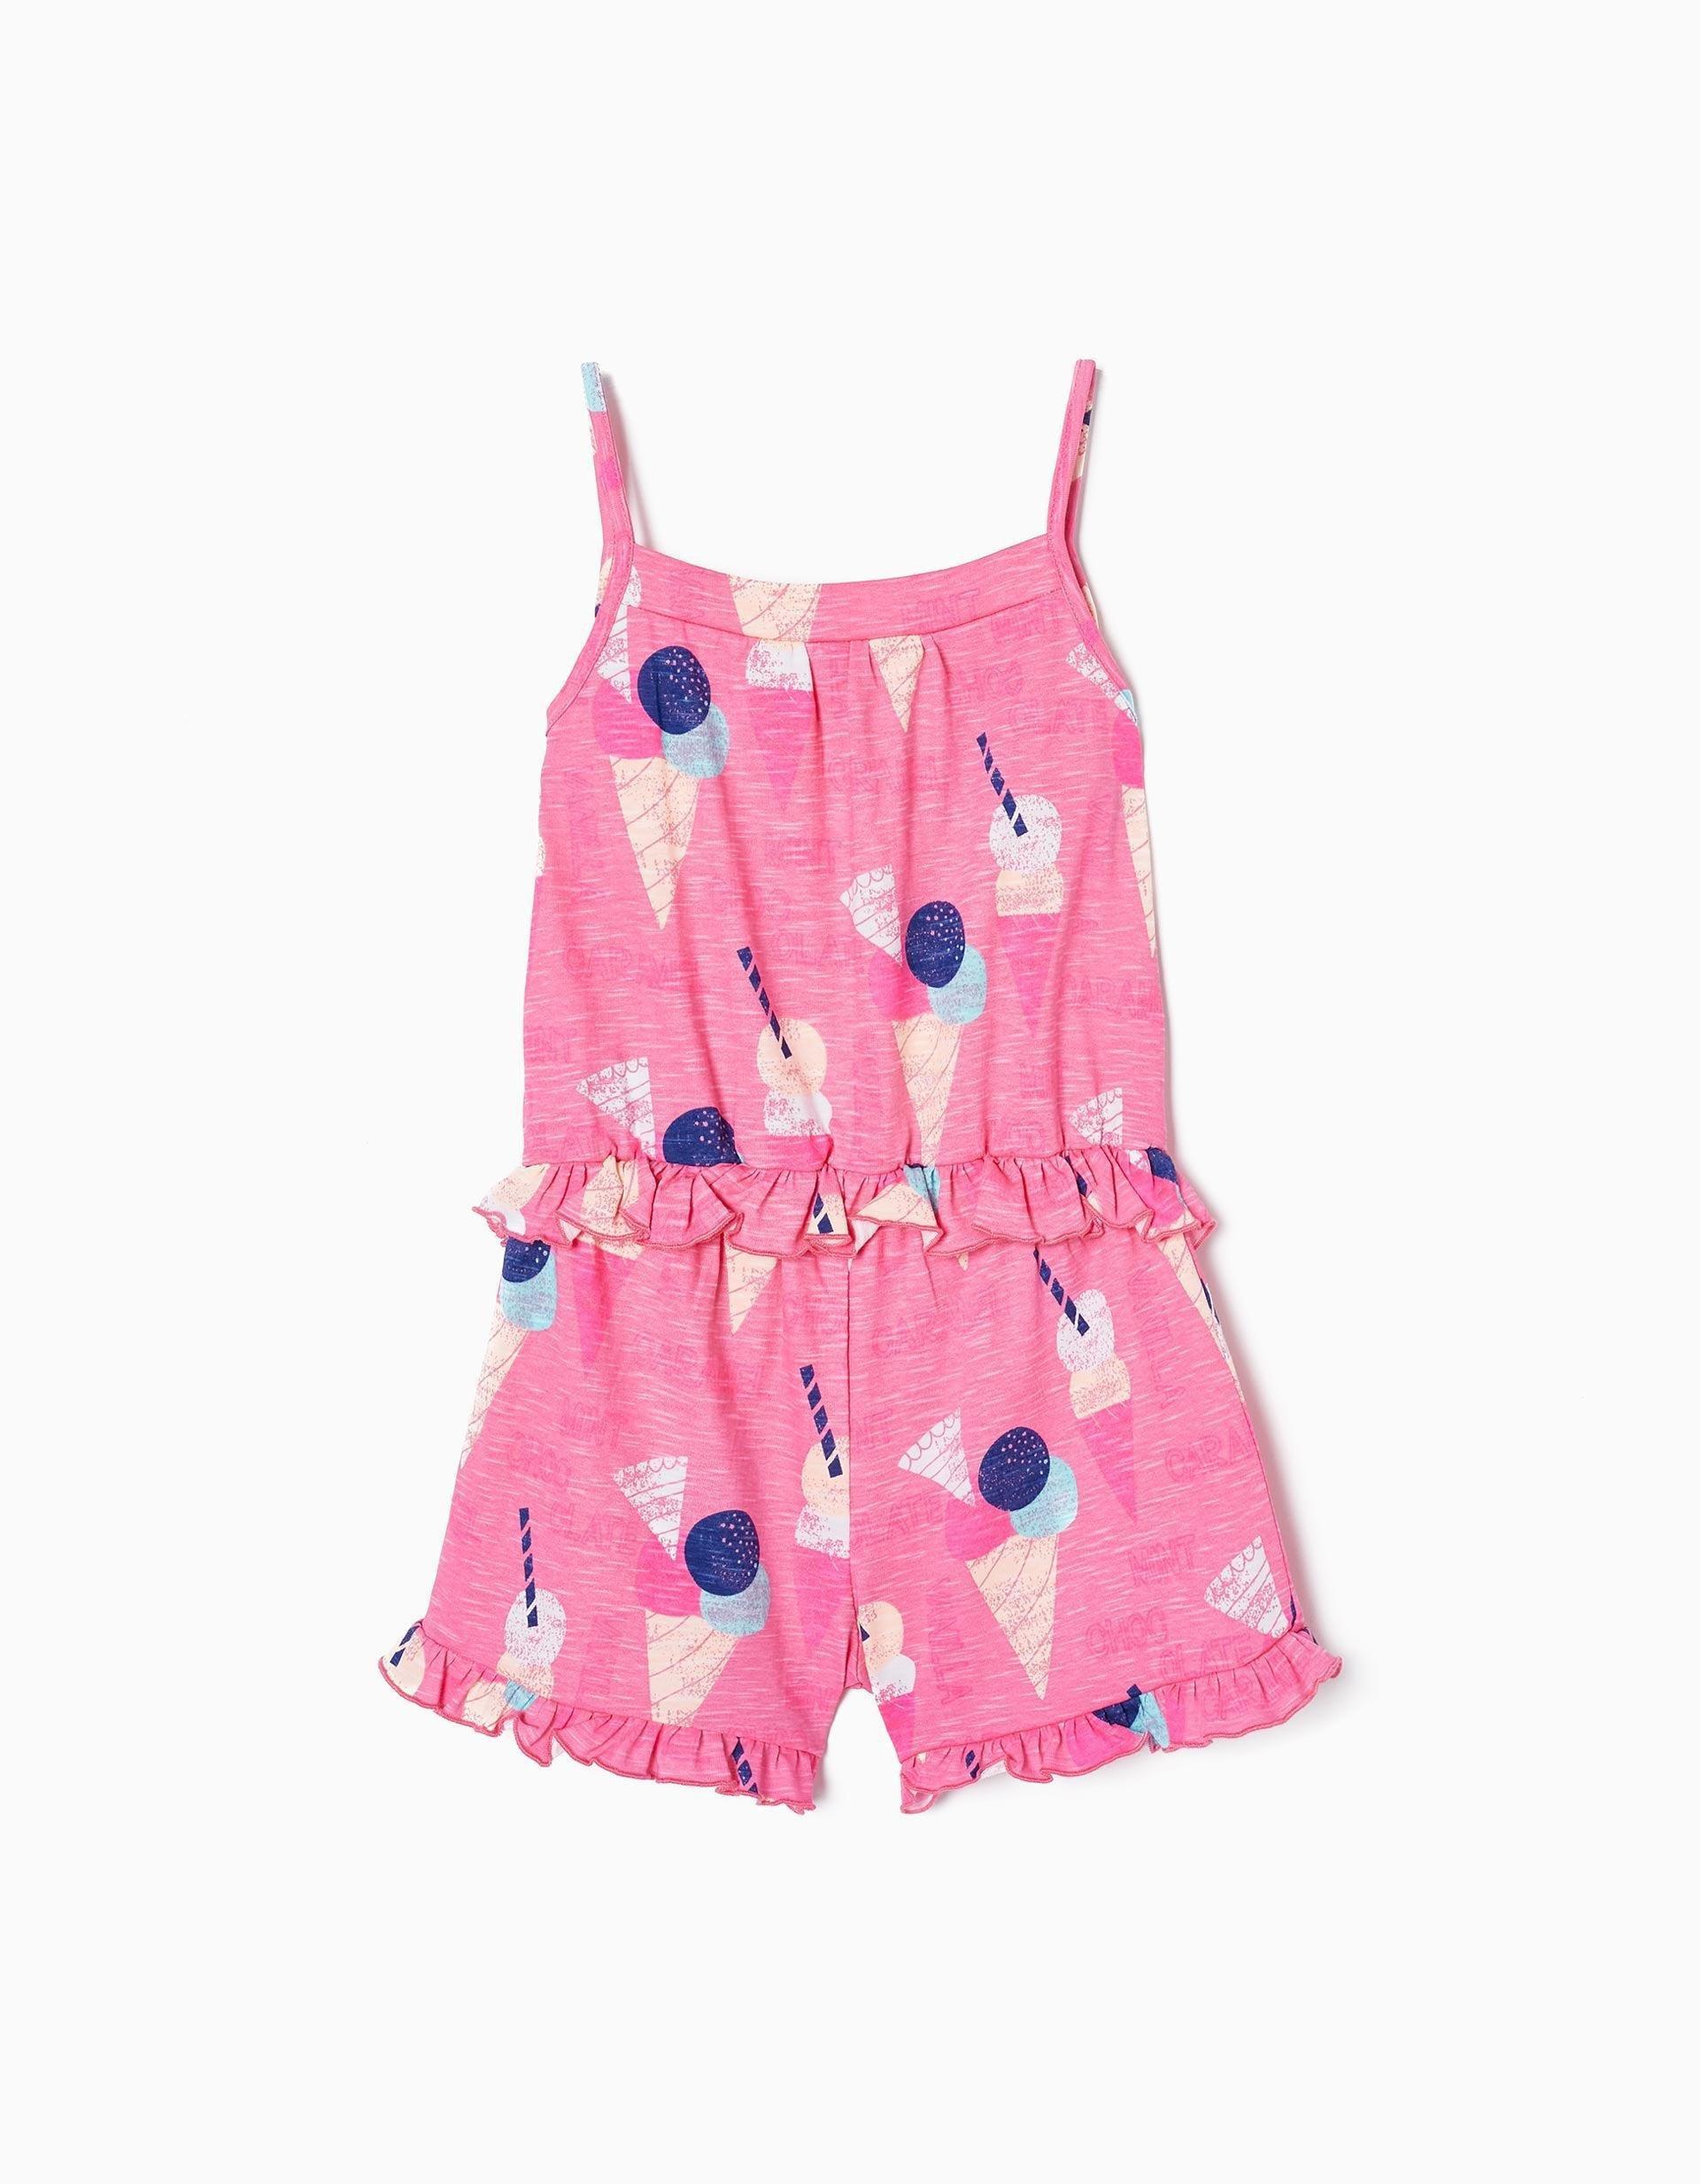 Zippy - Pink Printed Cotton Jumpsuit, Kids Girls